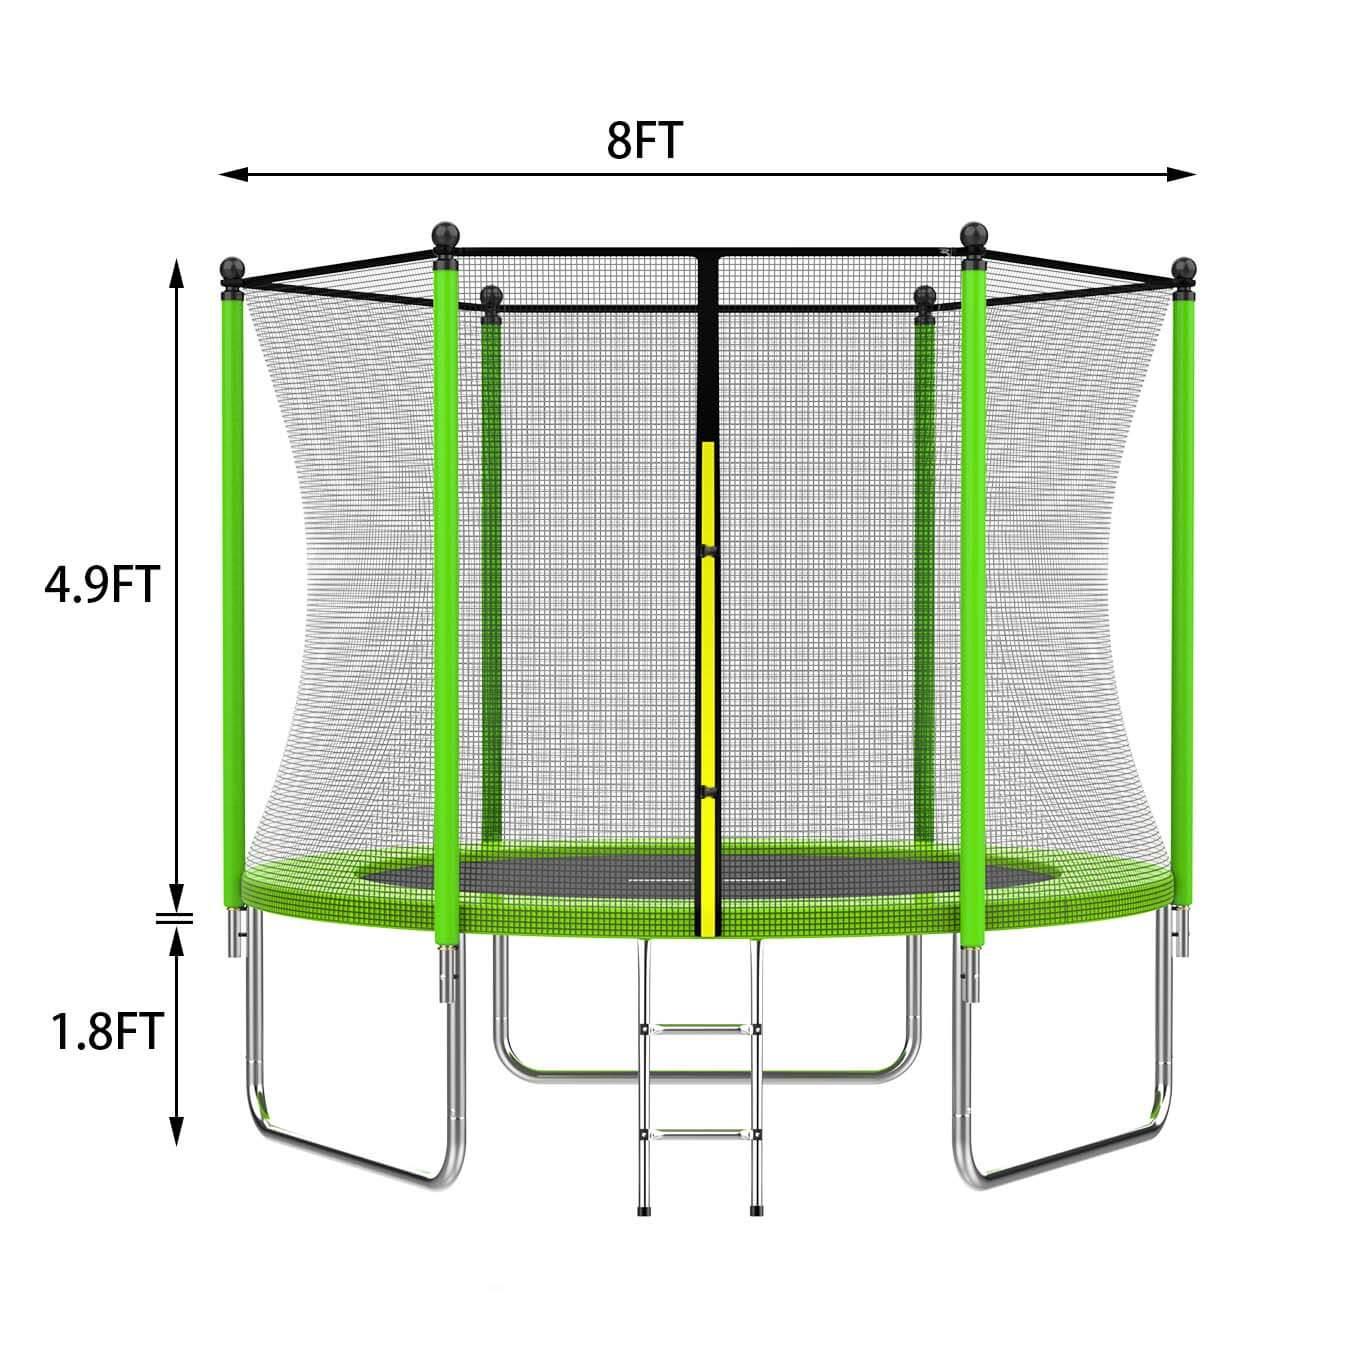 trampoline size